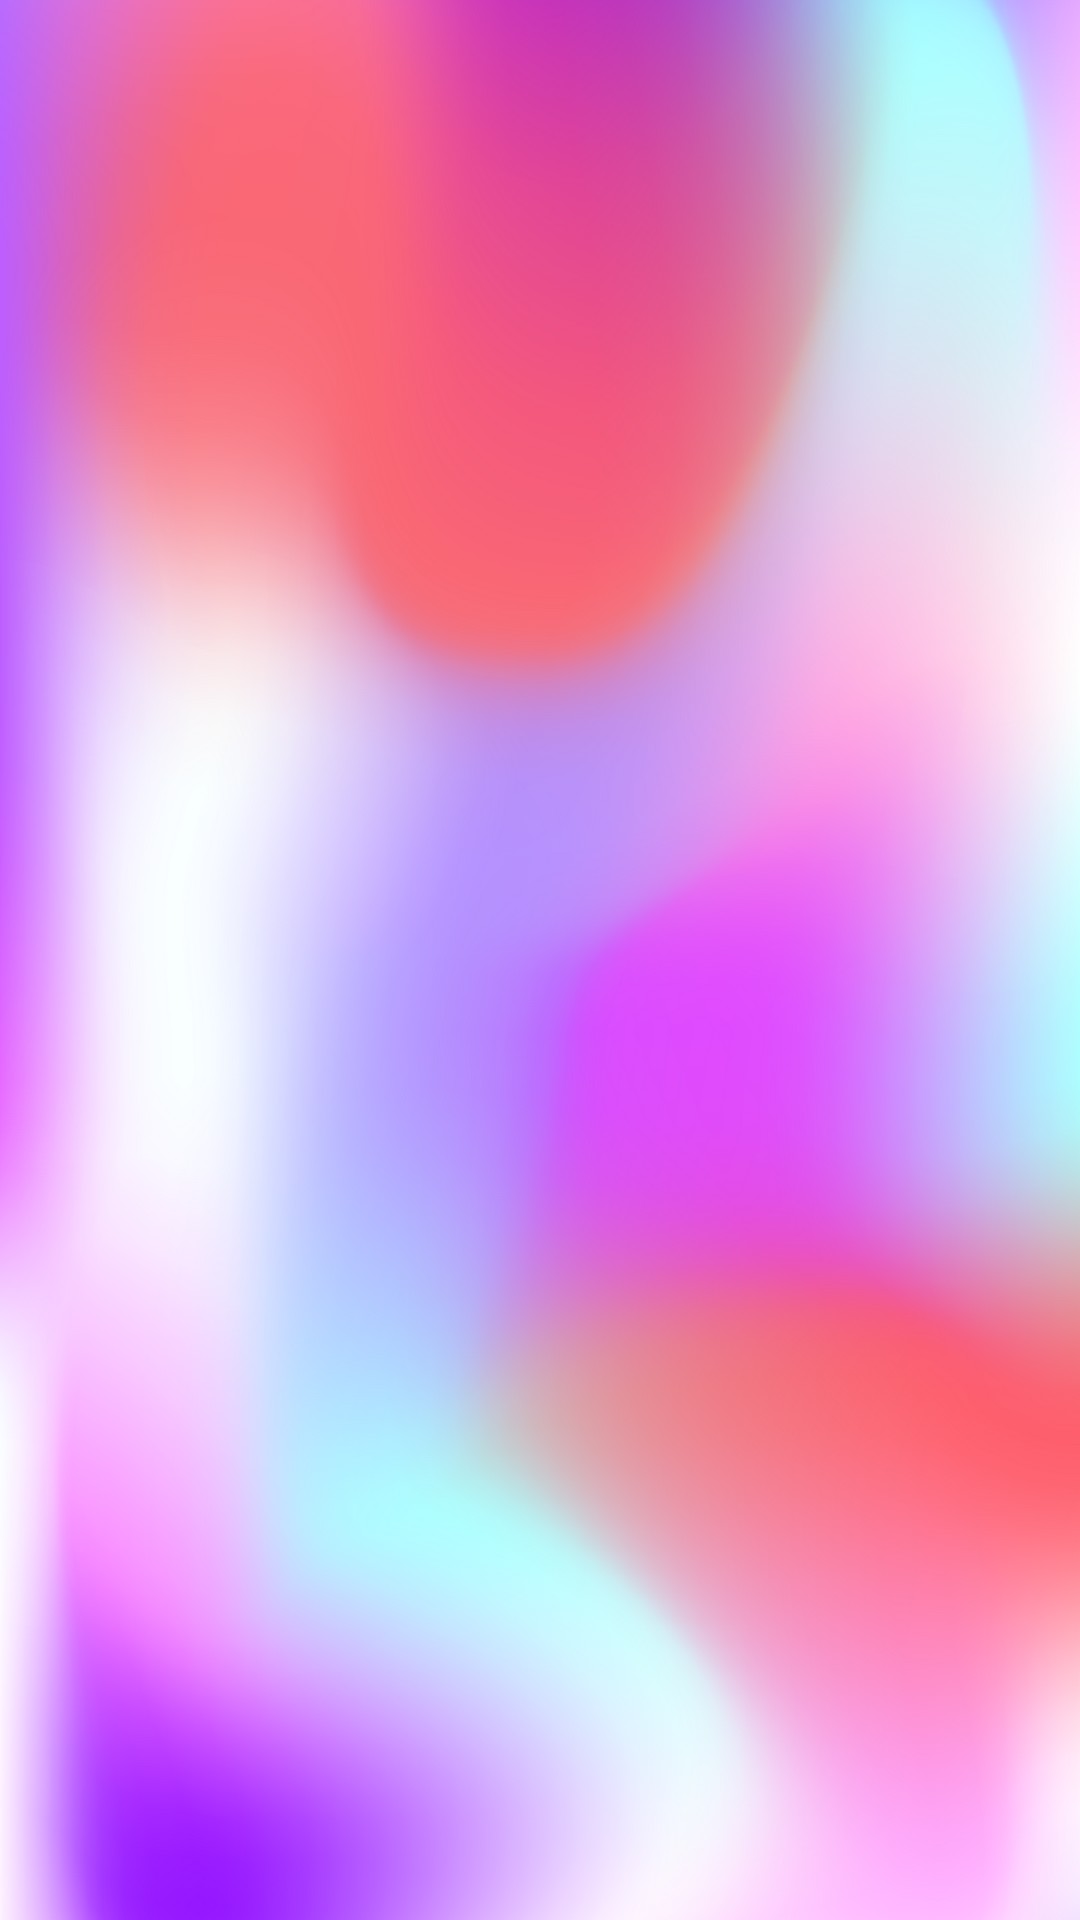 tapete tumblr hd,rosa,violett,lila,licht,buntheit